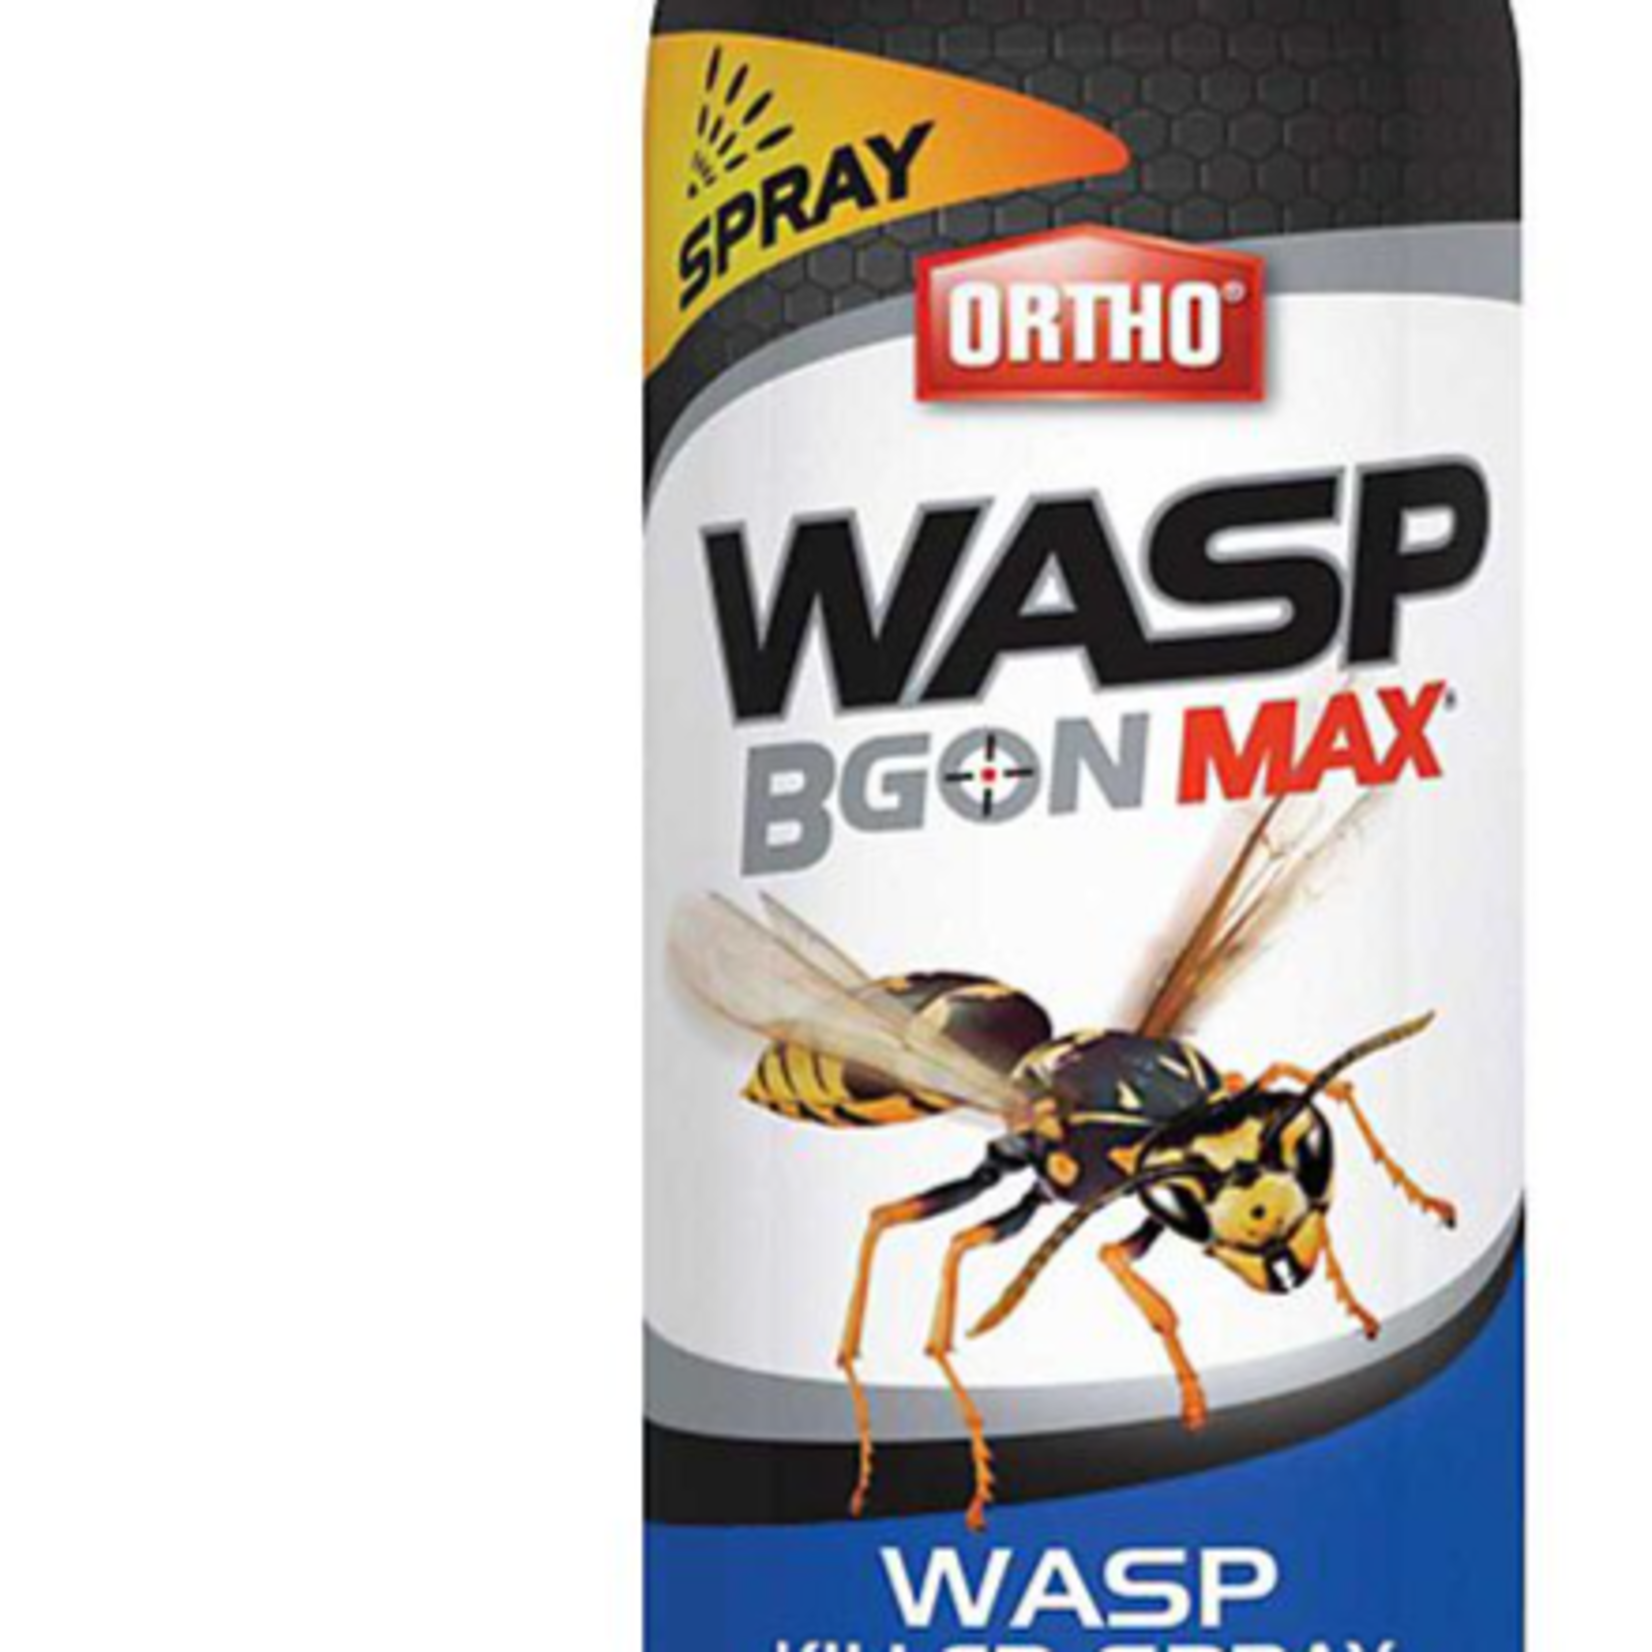 Ortho Wasp B Gon Max Spray 400g